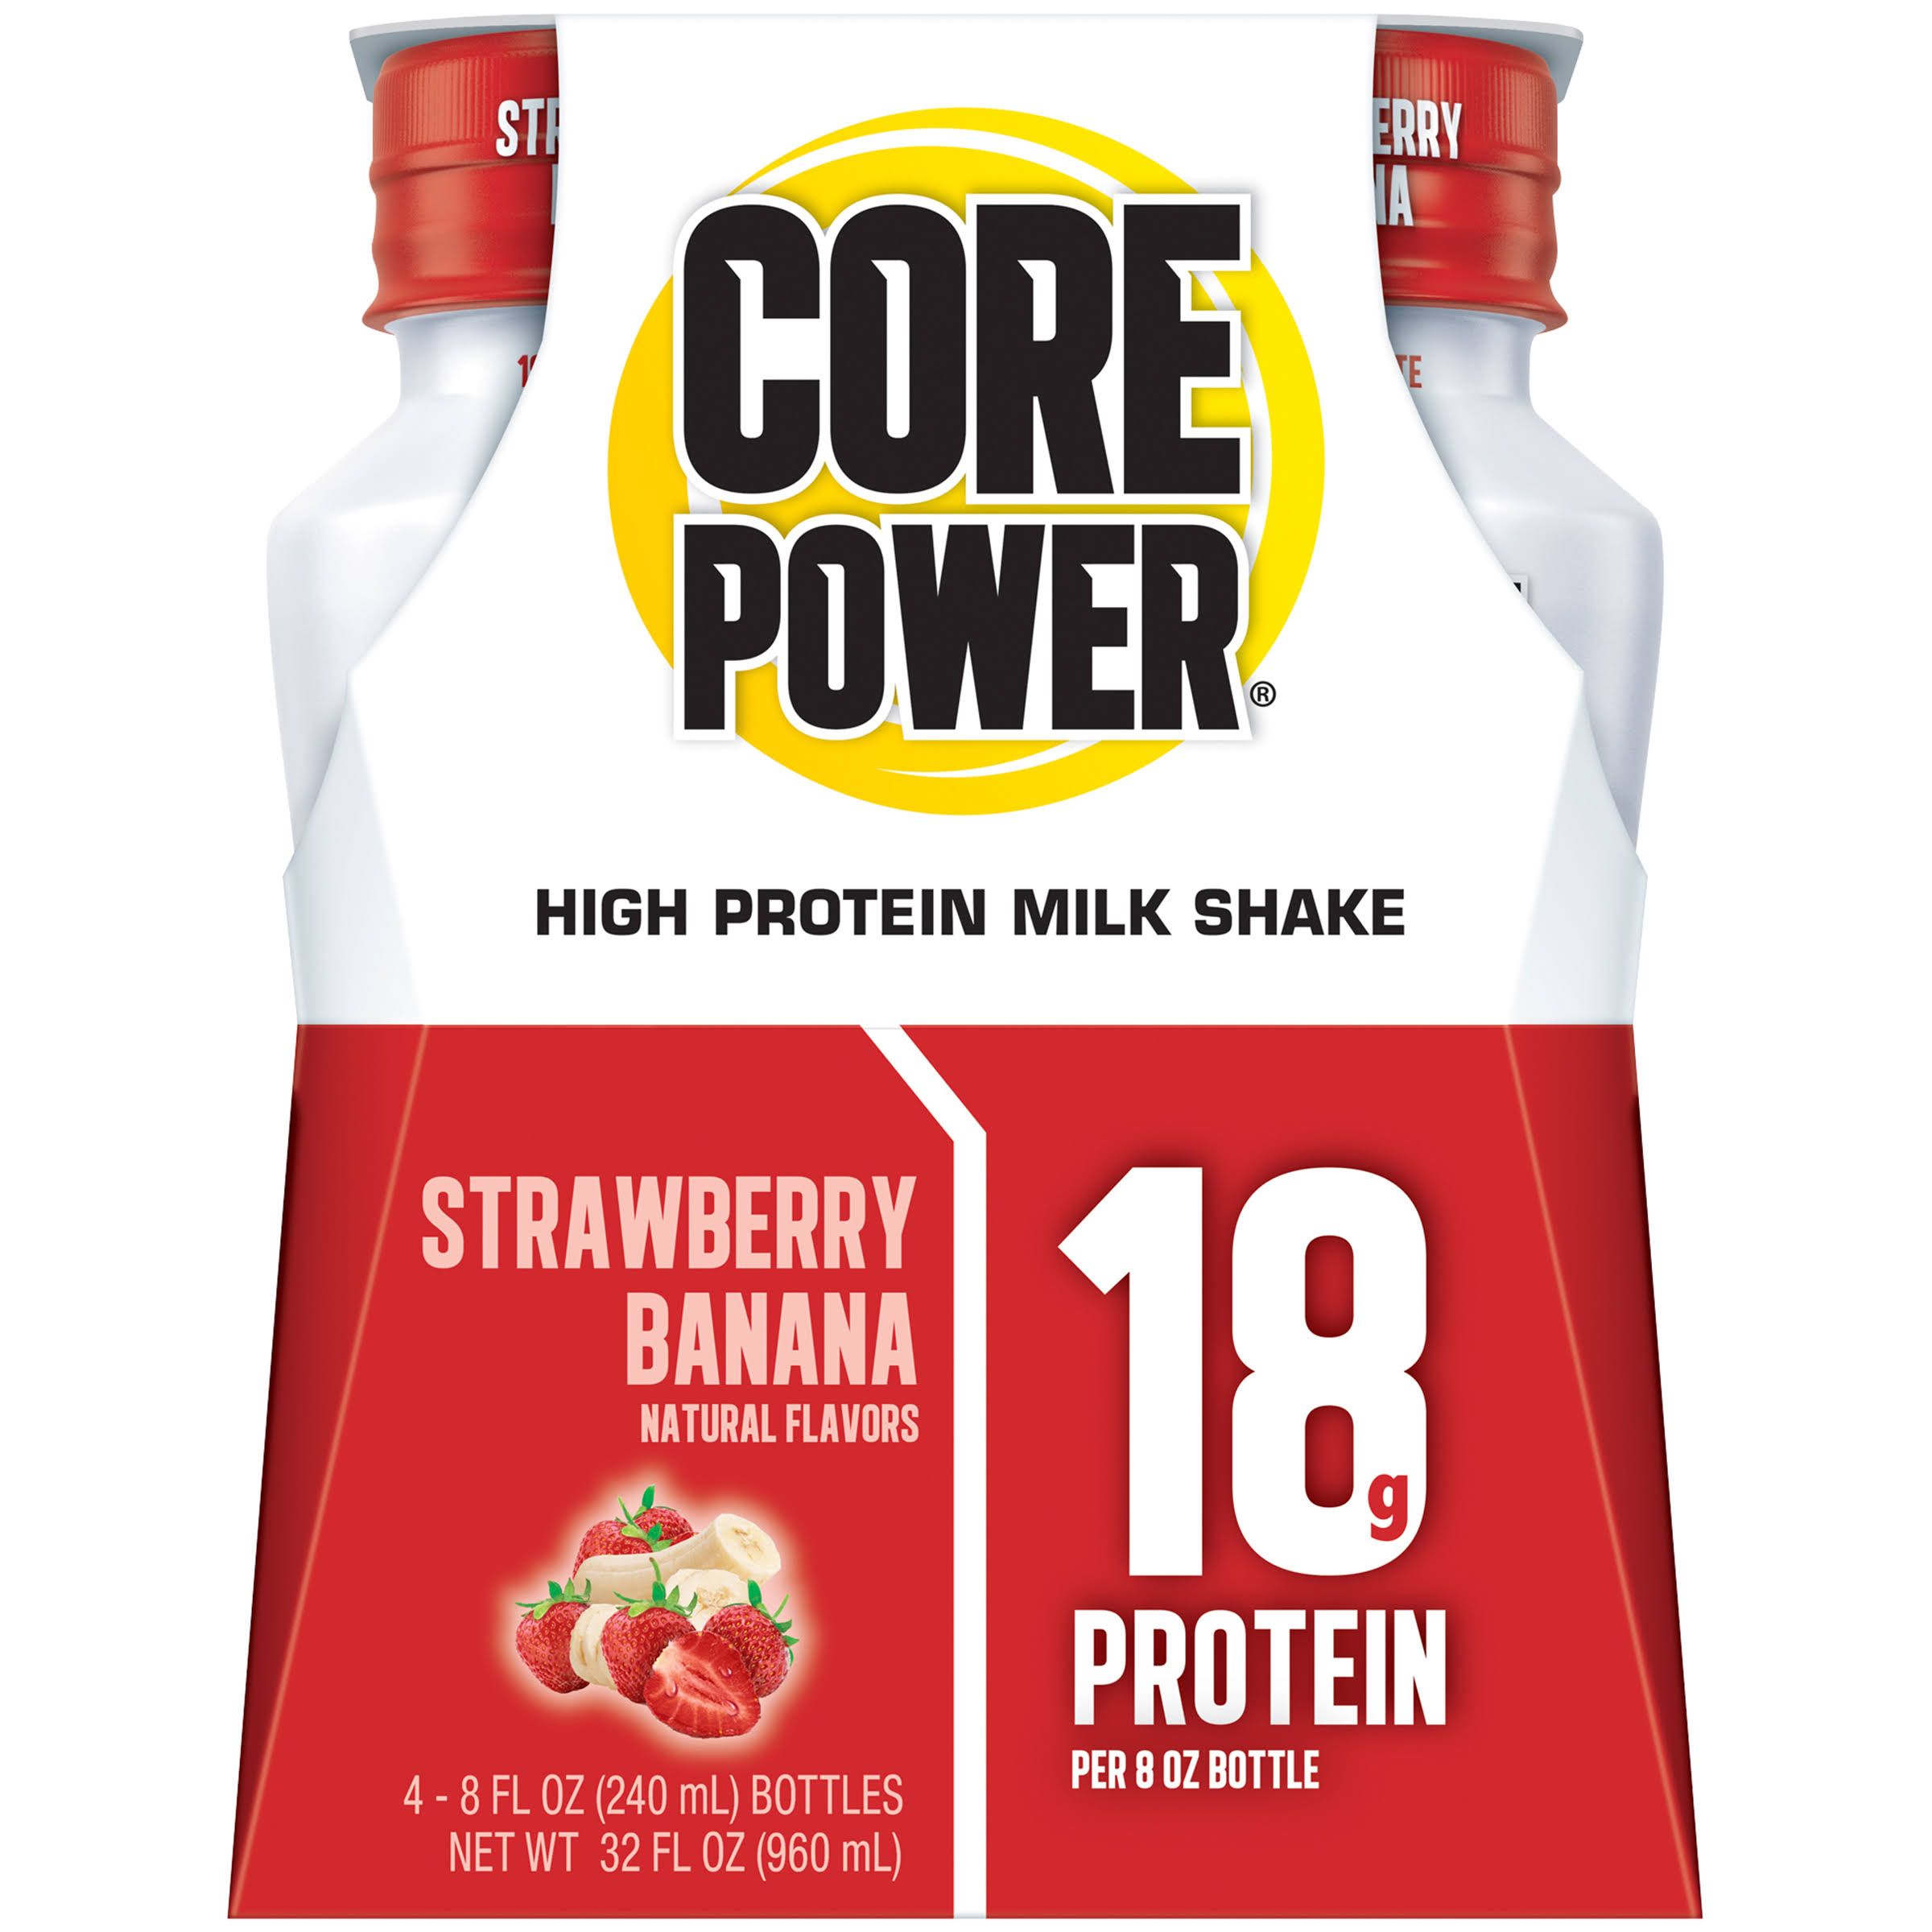 Core Power Strawberry Banana High Protein Milkshake 4-8 Fl. Oz. Bottles